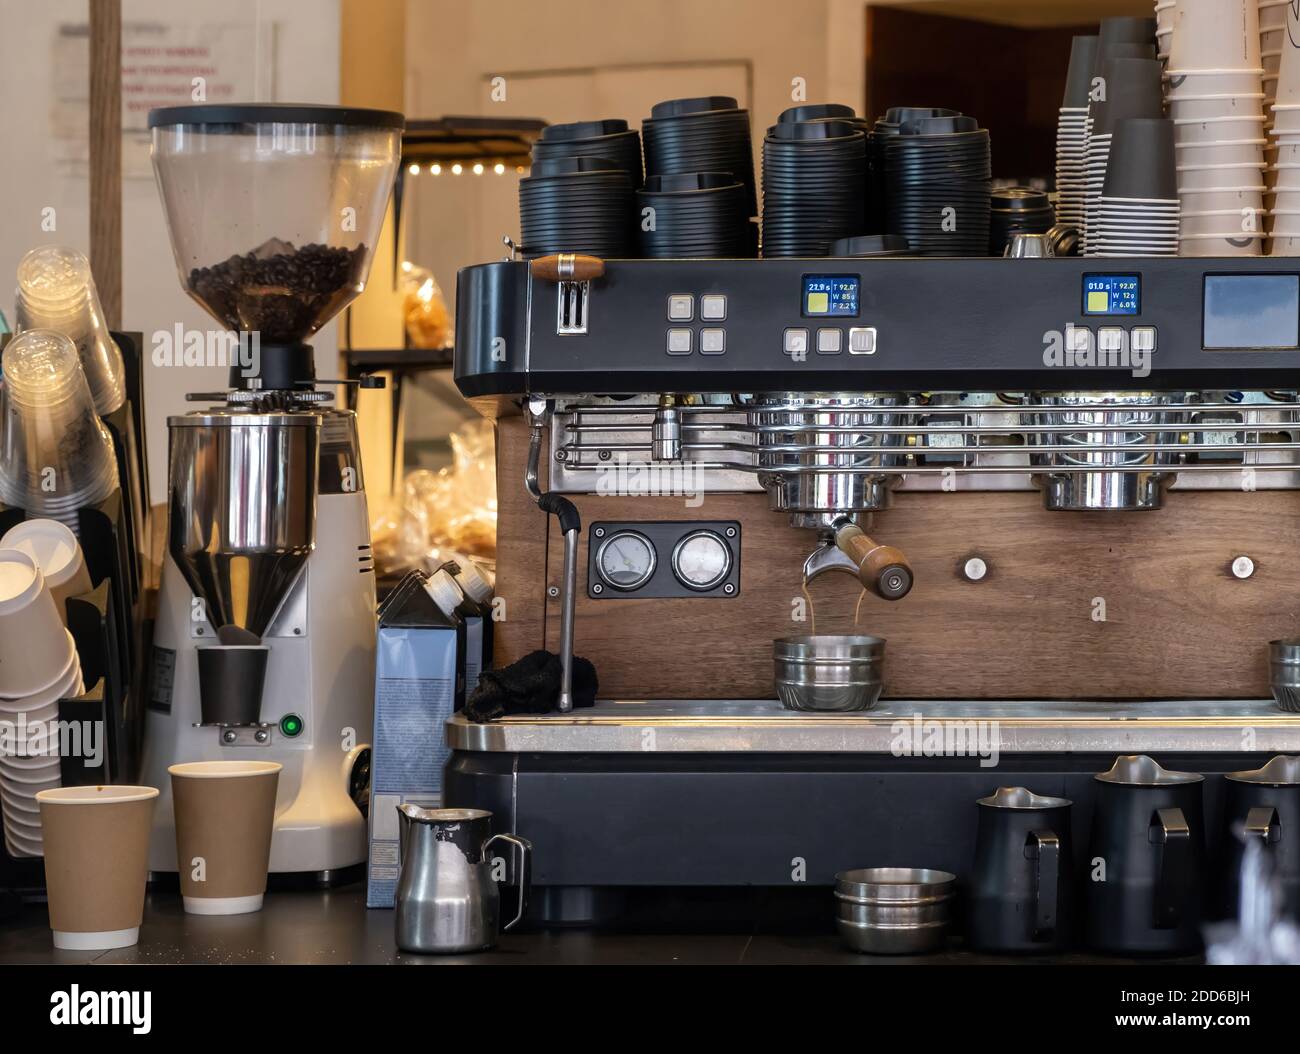 Shipley Alperne Ekspression Coffee machine, cafe shop. Espresso preparation, professional equipment  background, takeaway service Stock Photo - Alamy